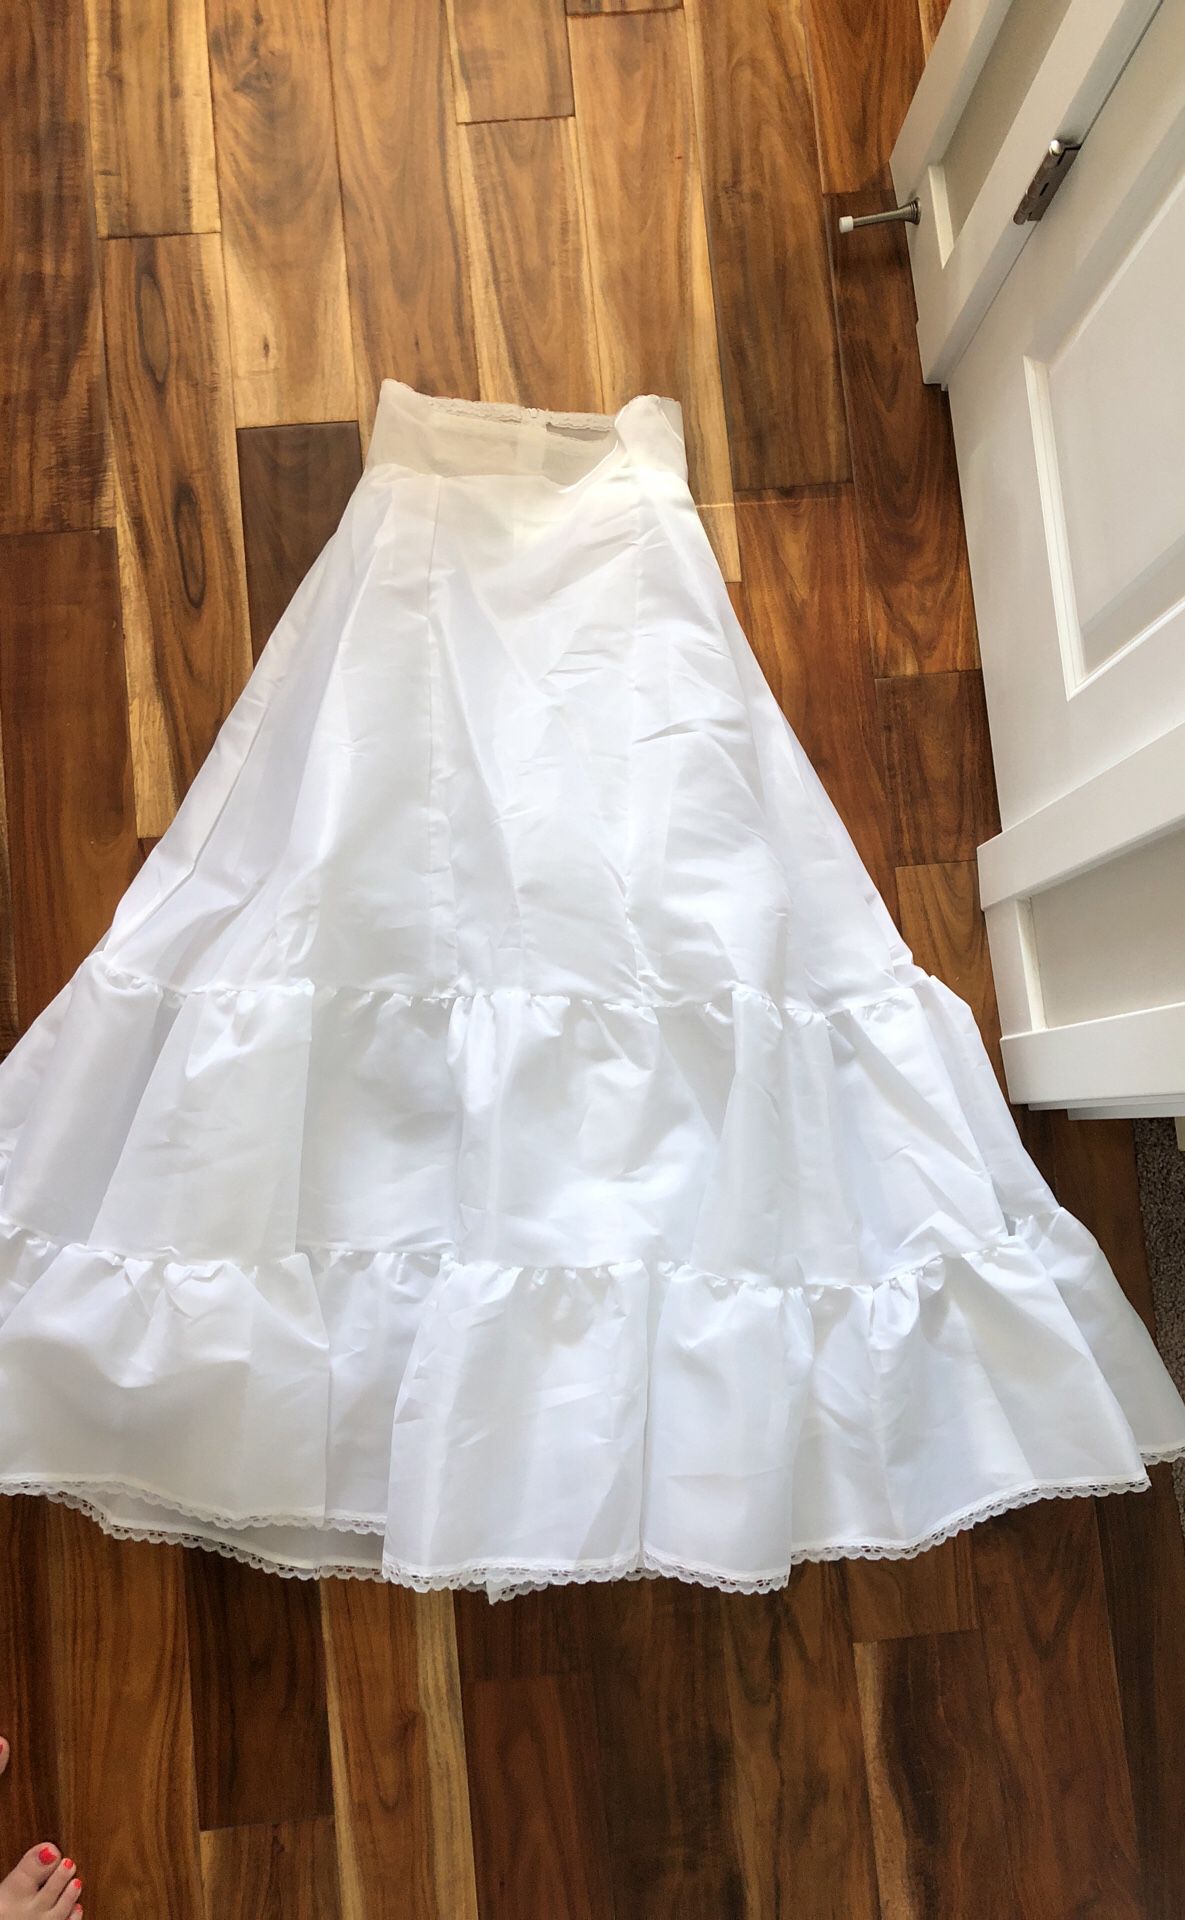 White Petticoat